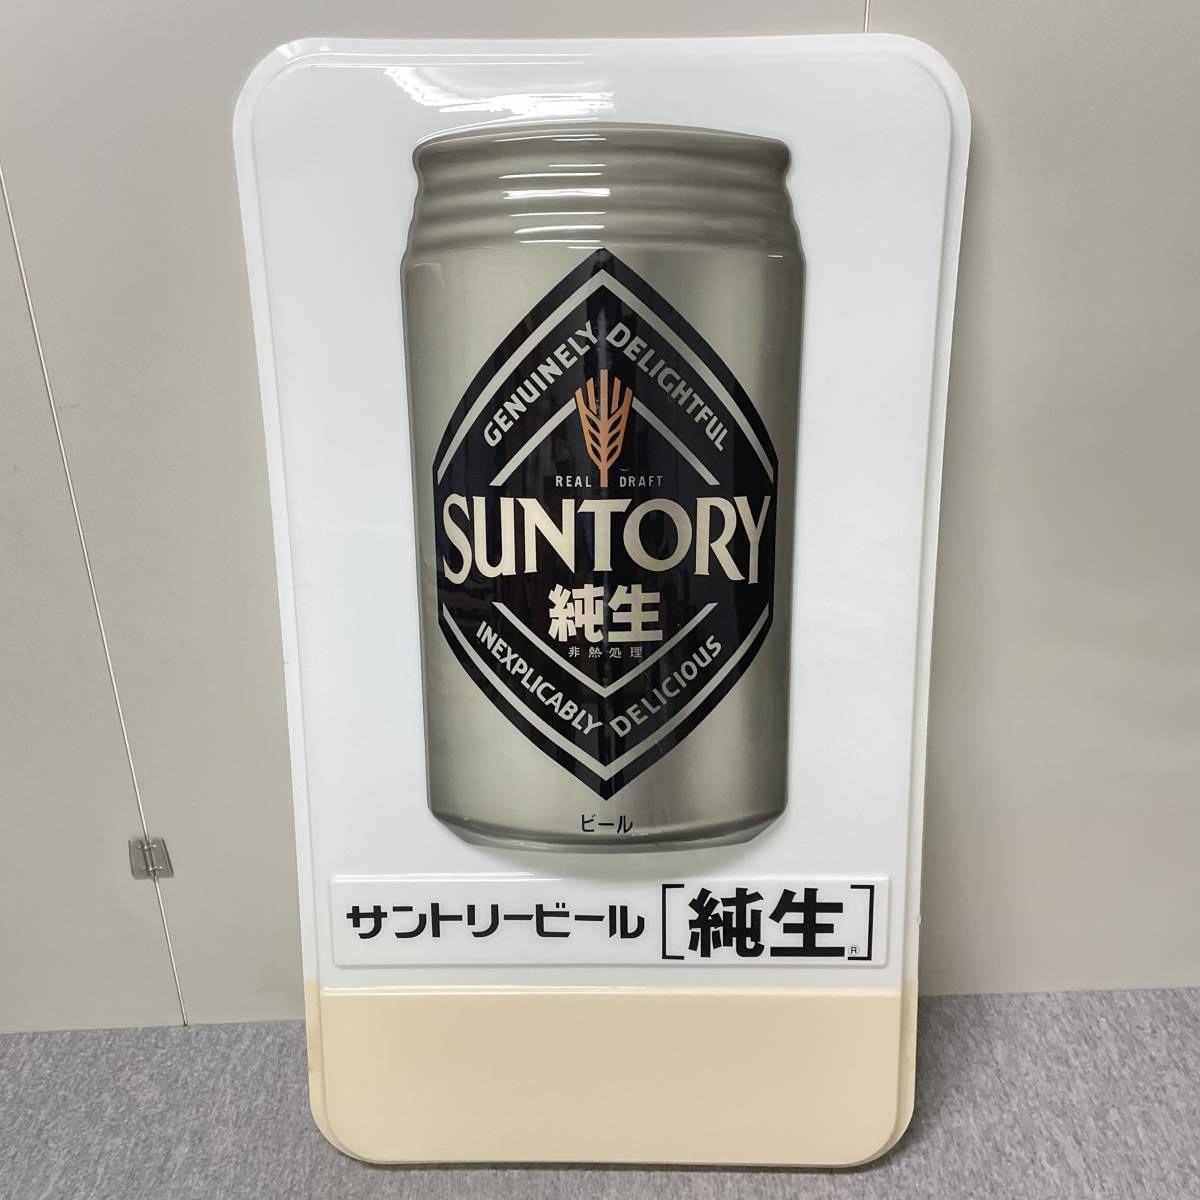 4p842 看板 サントリー ビール 純生 生 SUNTORY 昭和 レトロ 